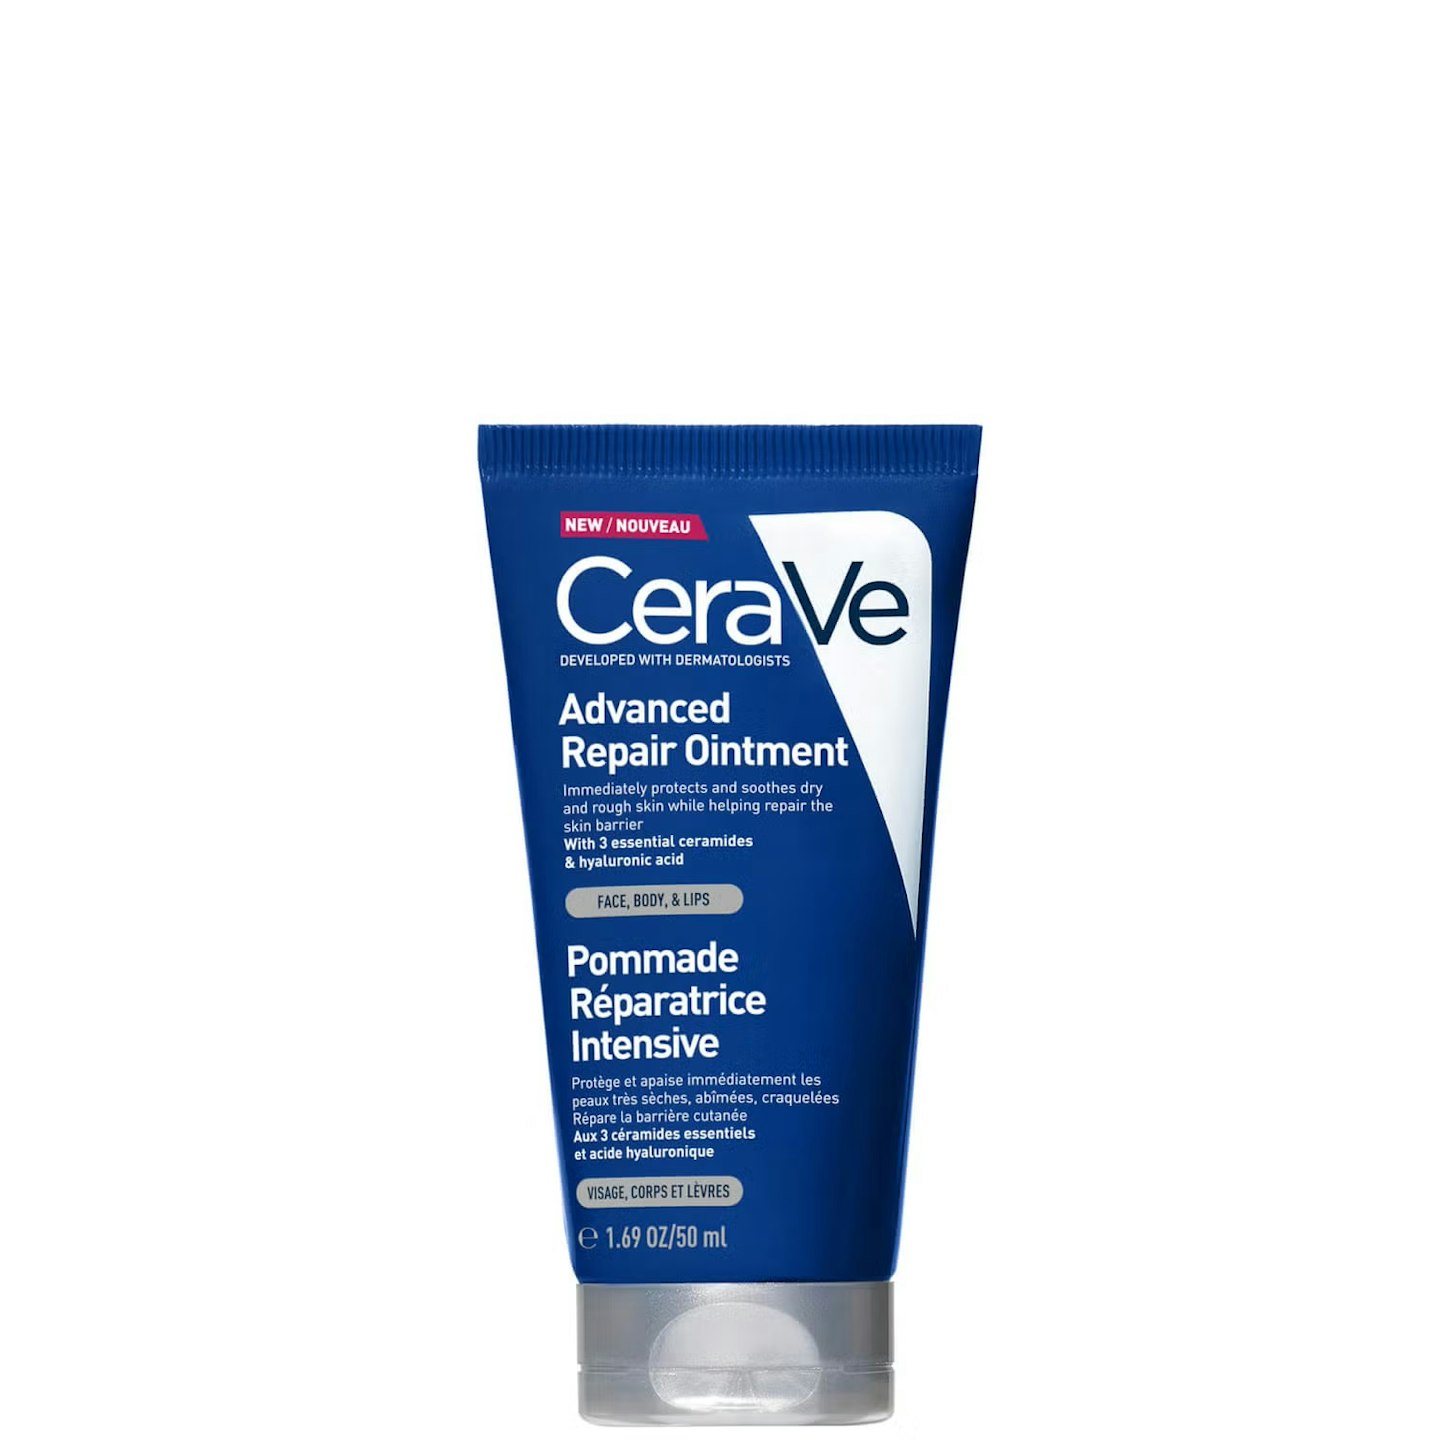  Cerave Advanced Repair Ointment